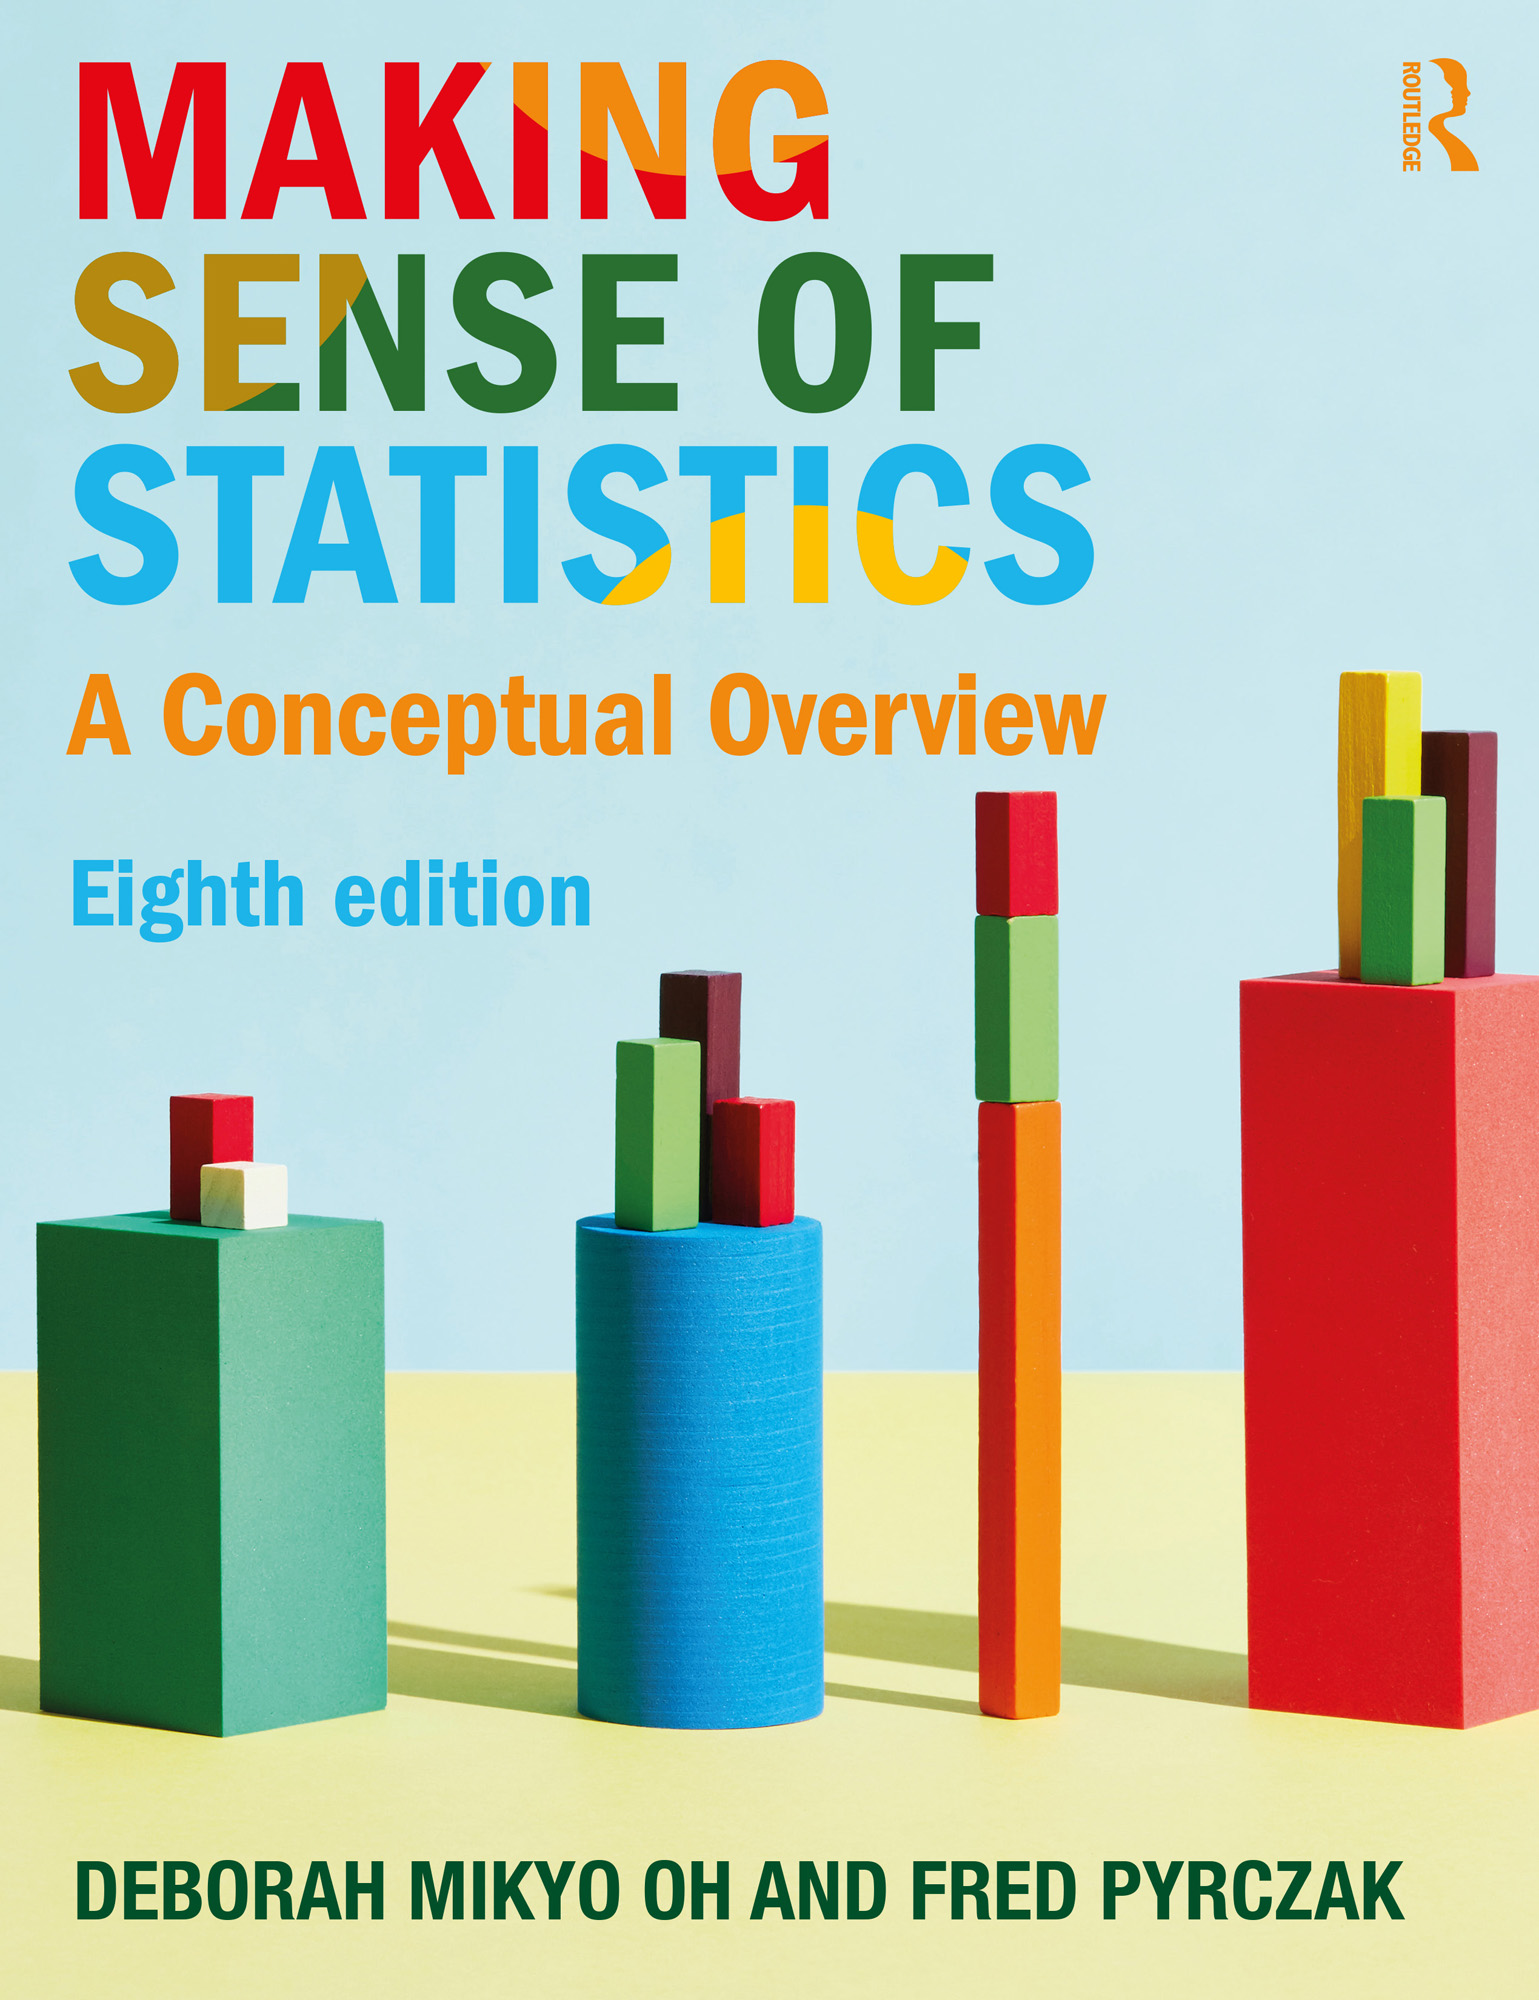 Making Sense of Statistics, 8th Edition(Original PDF from Publisher)